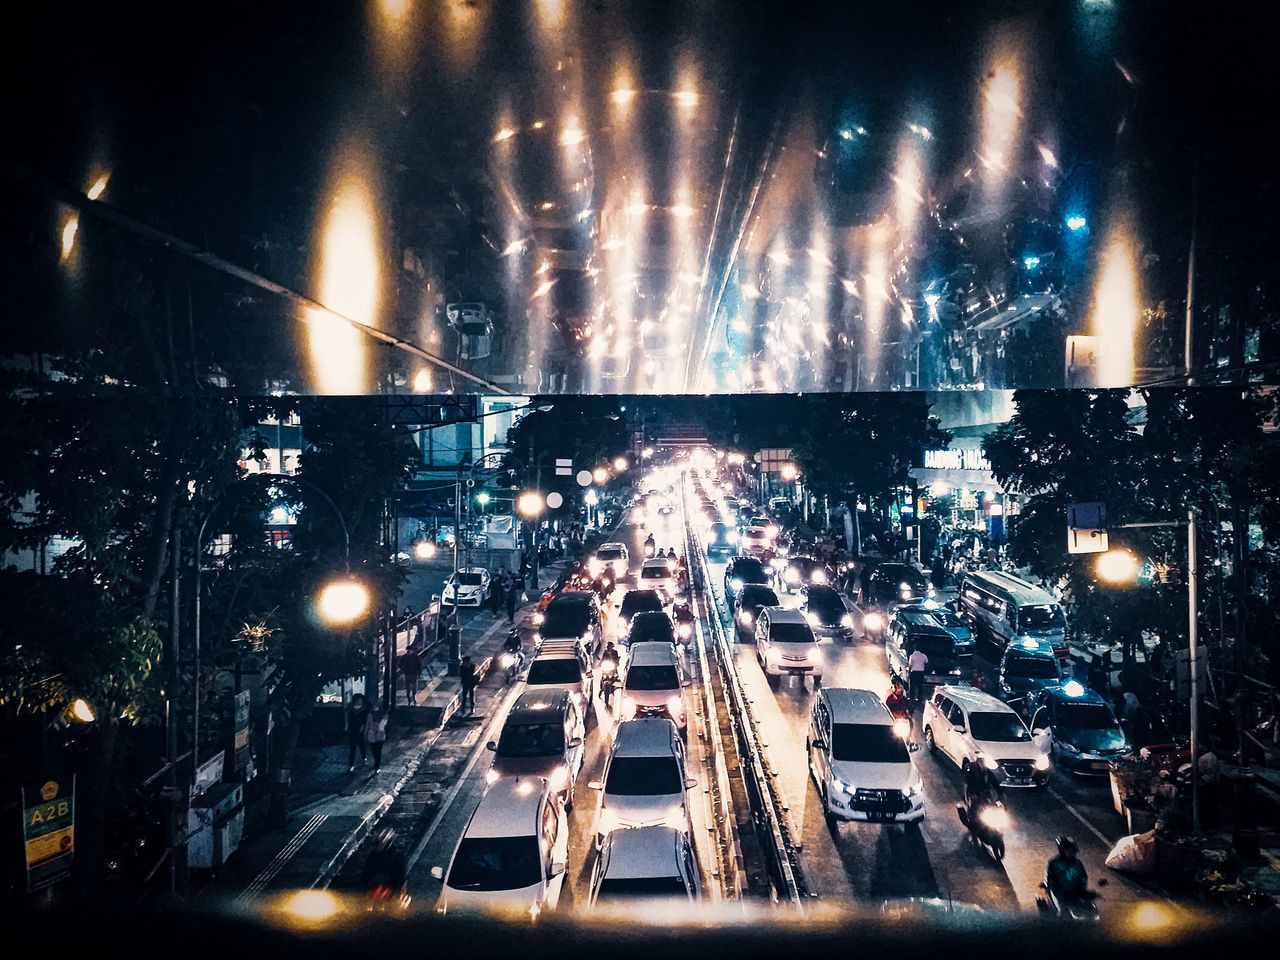 HIGH ANGLE VIEW OF ILLUMINATED STREET AT NIGHT